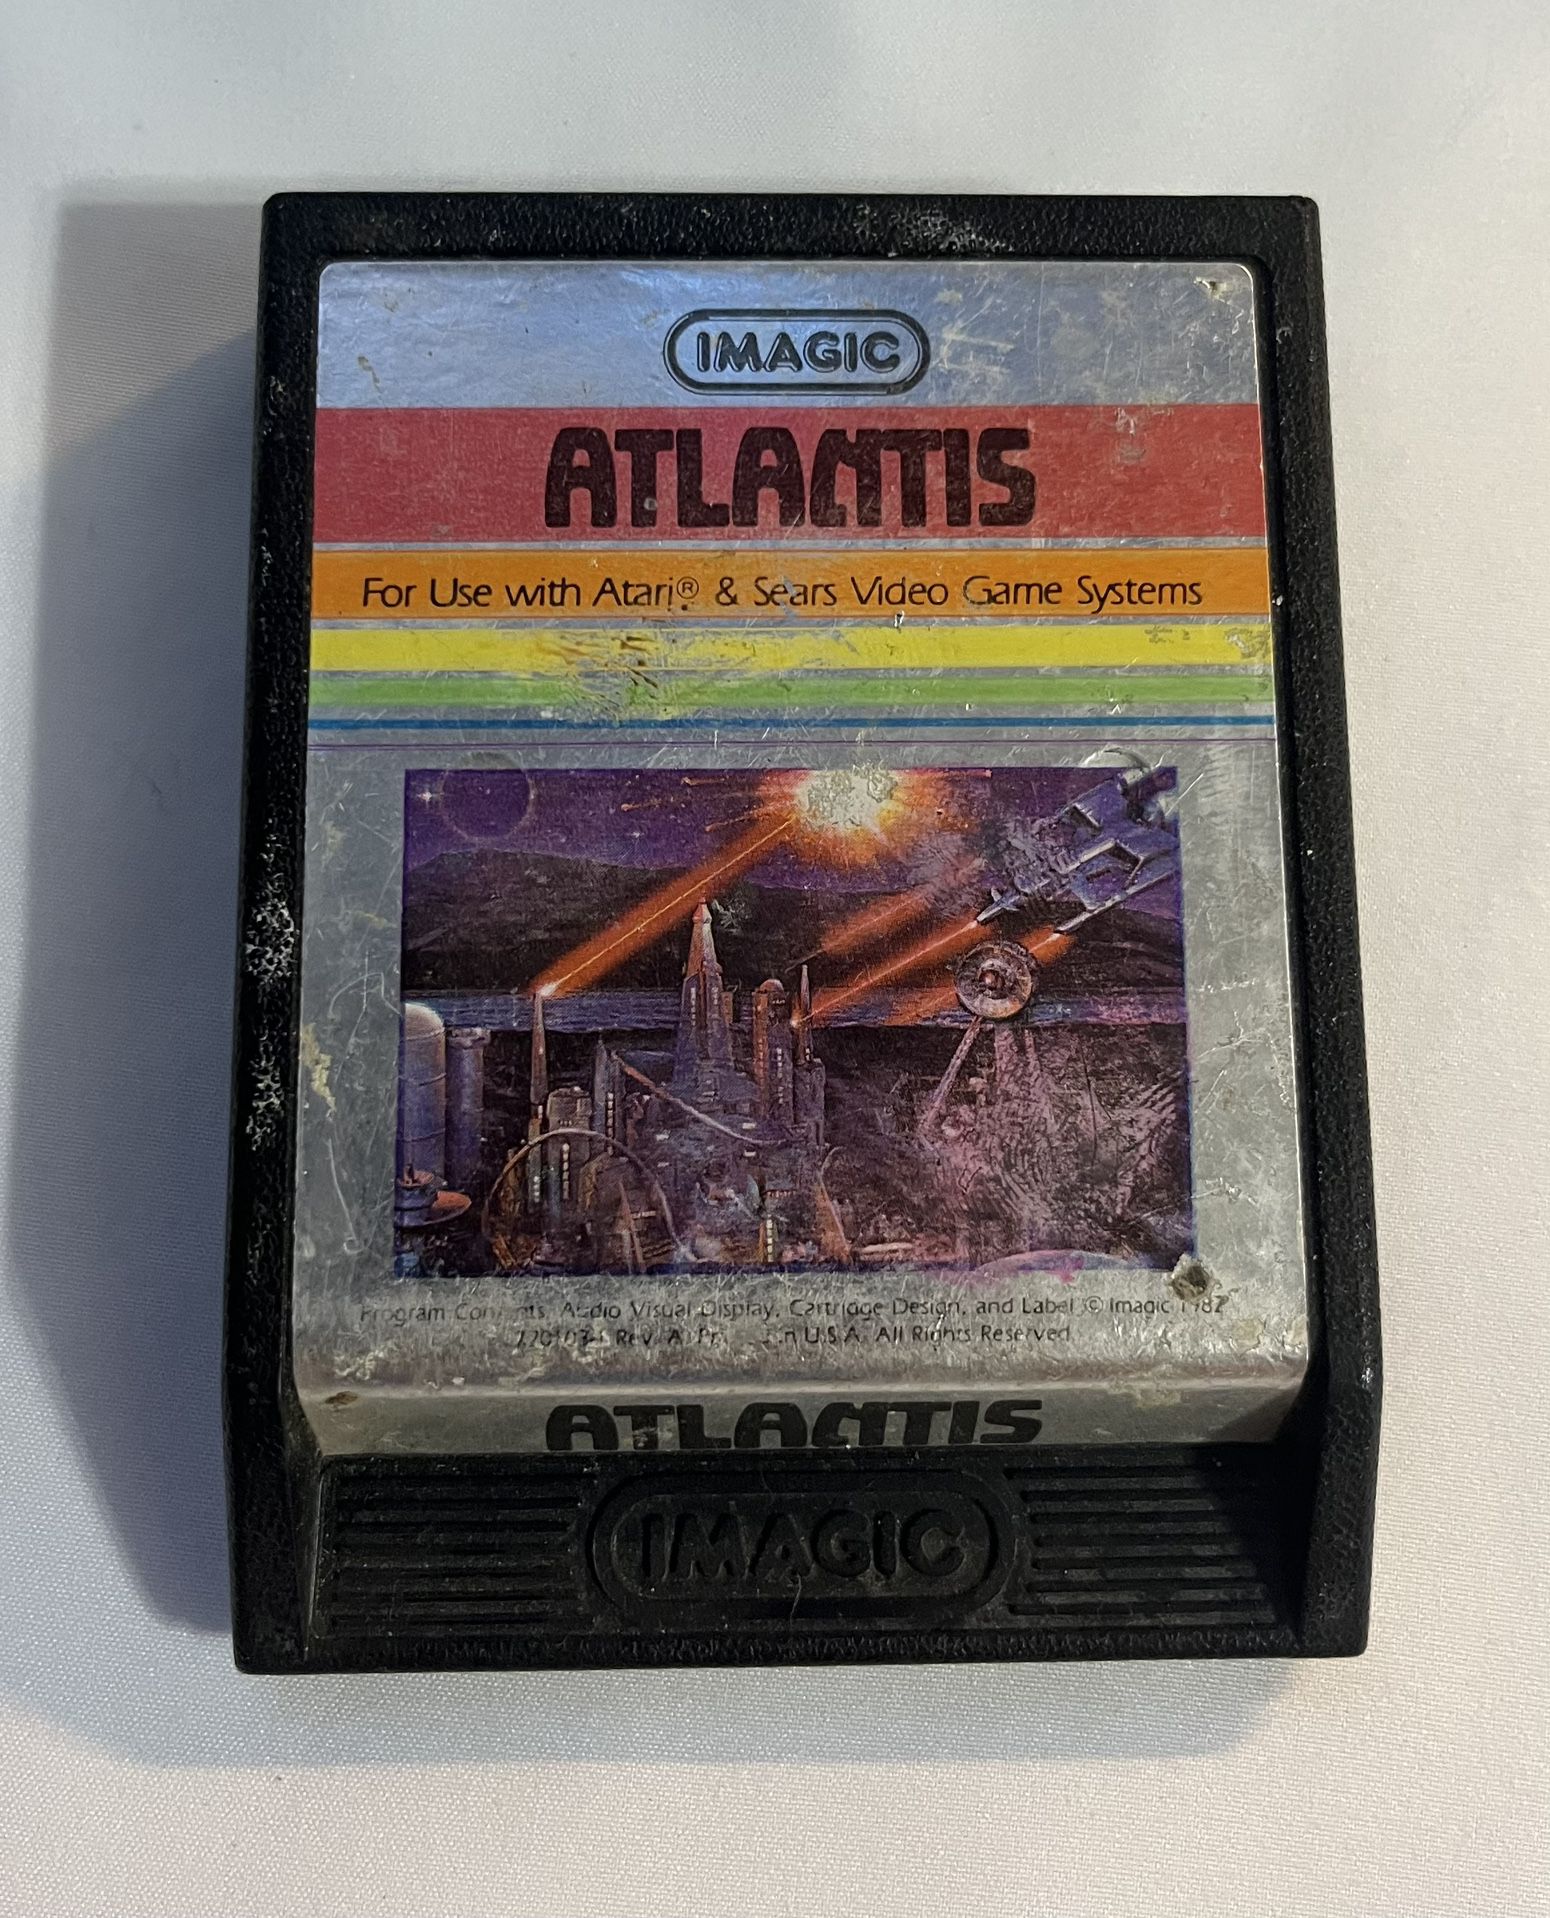 Atlantis Atari 2600, 1982 iMagic Retro Gaming Cartridge Tested Working